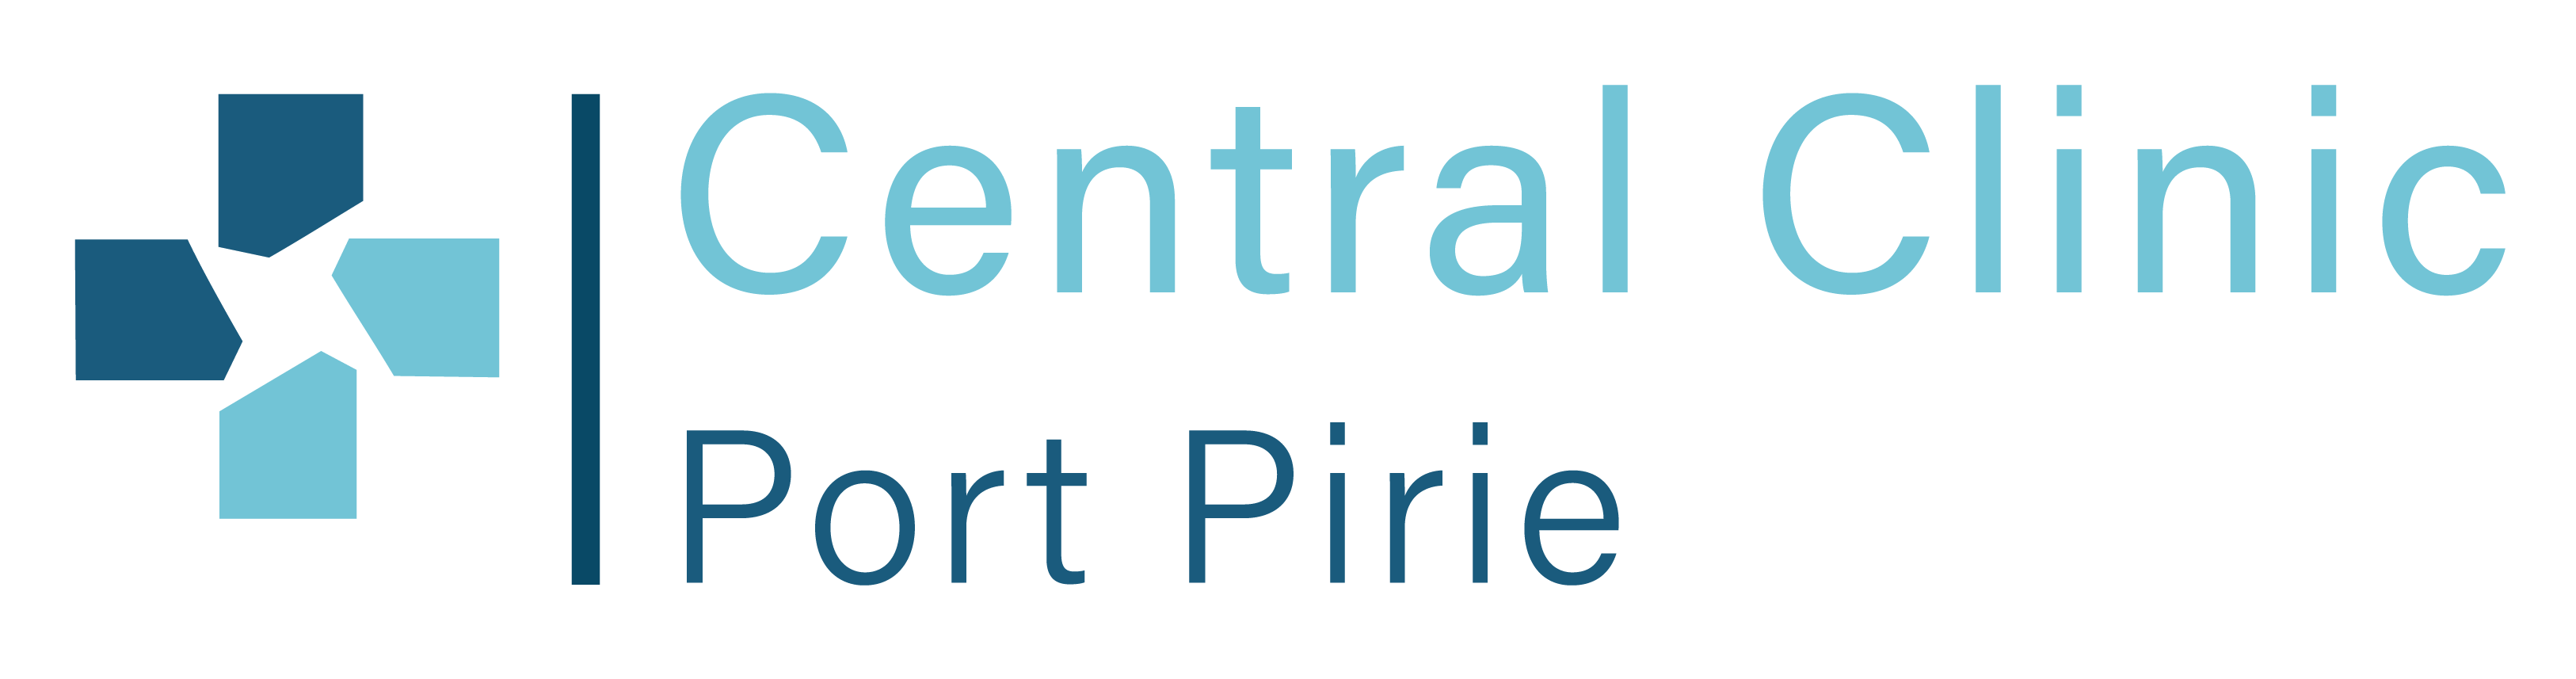 MF Central Clinic Port Pirie Towns Logo Long